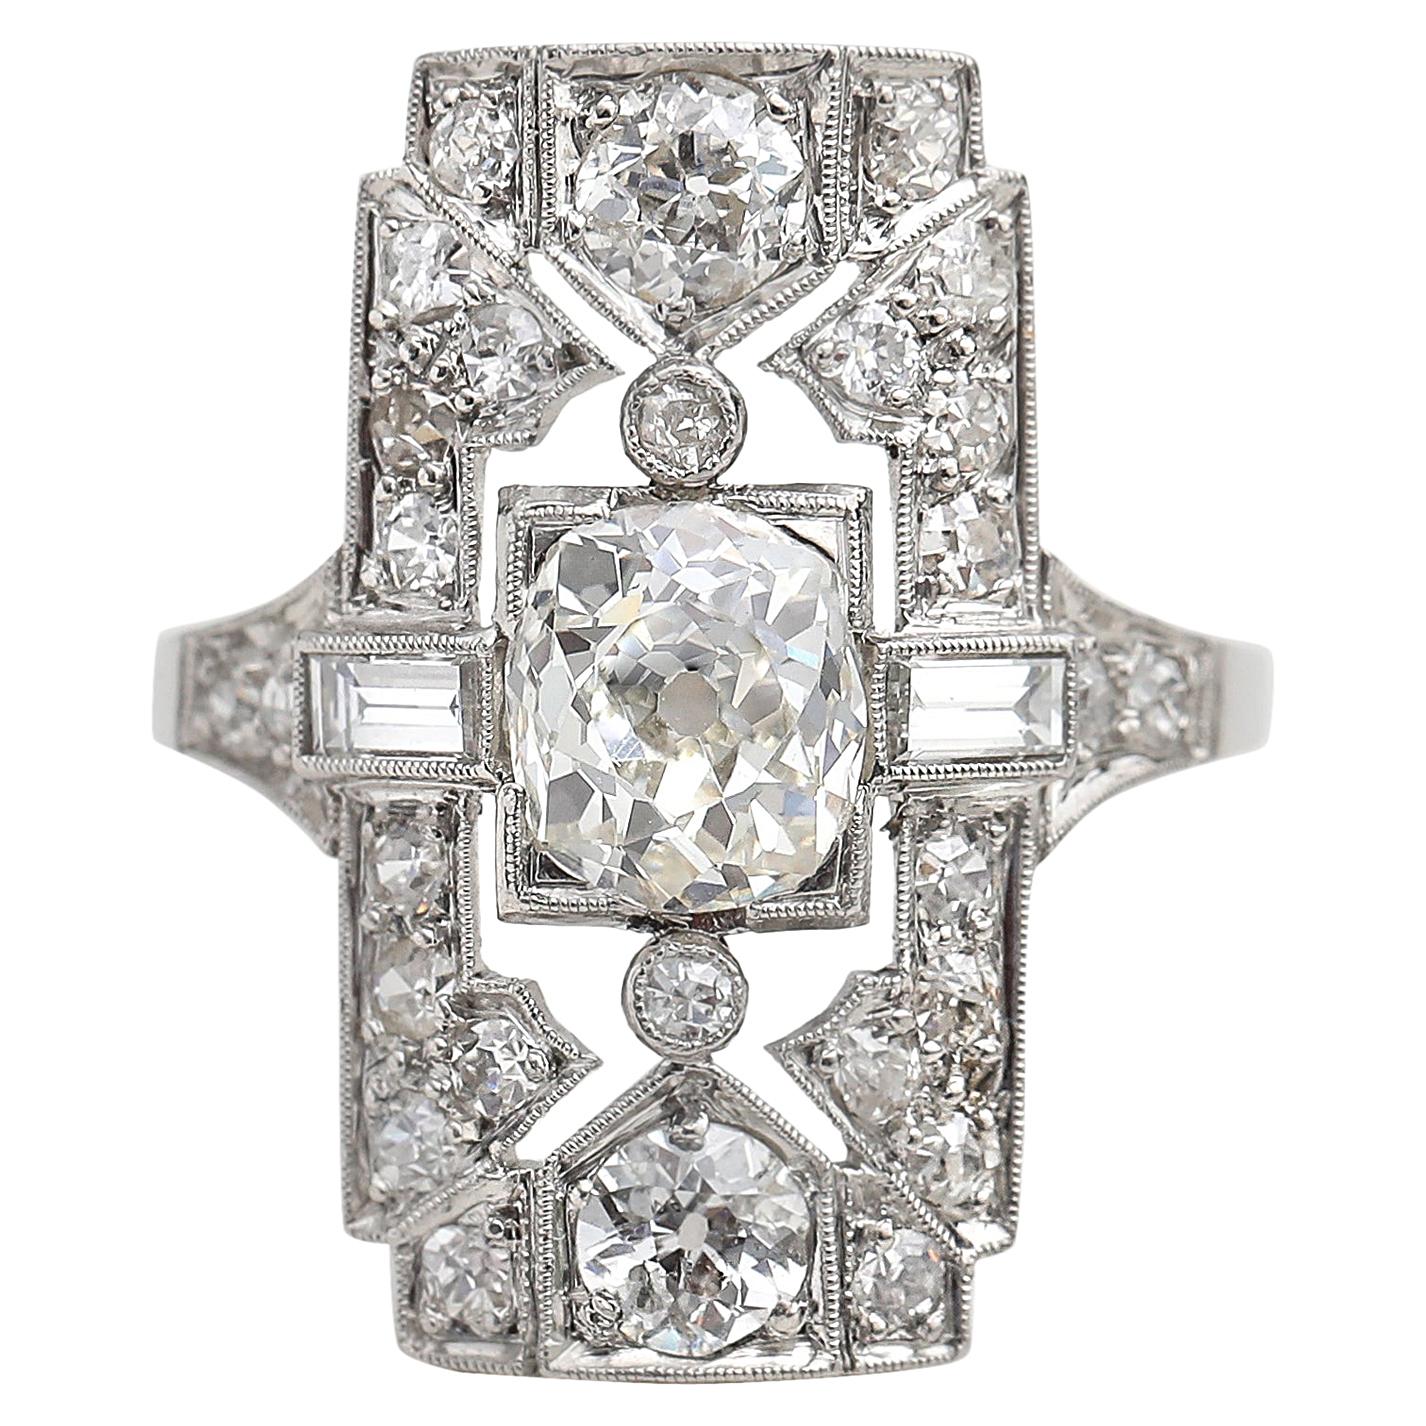 1920s 2.40 Carat Total Diamond Engagement Shield Ring in Platinum